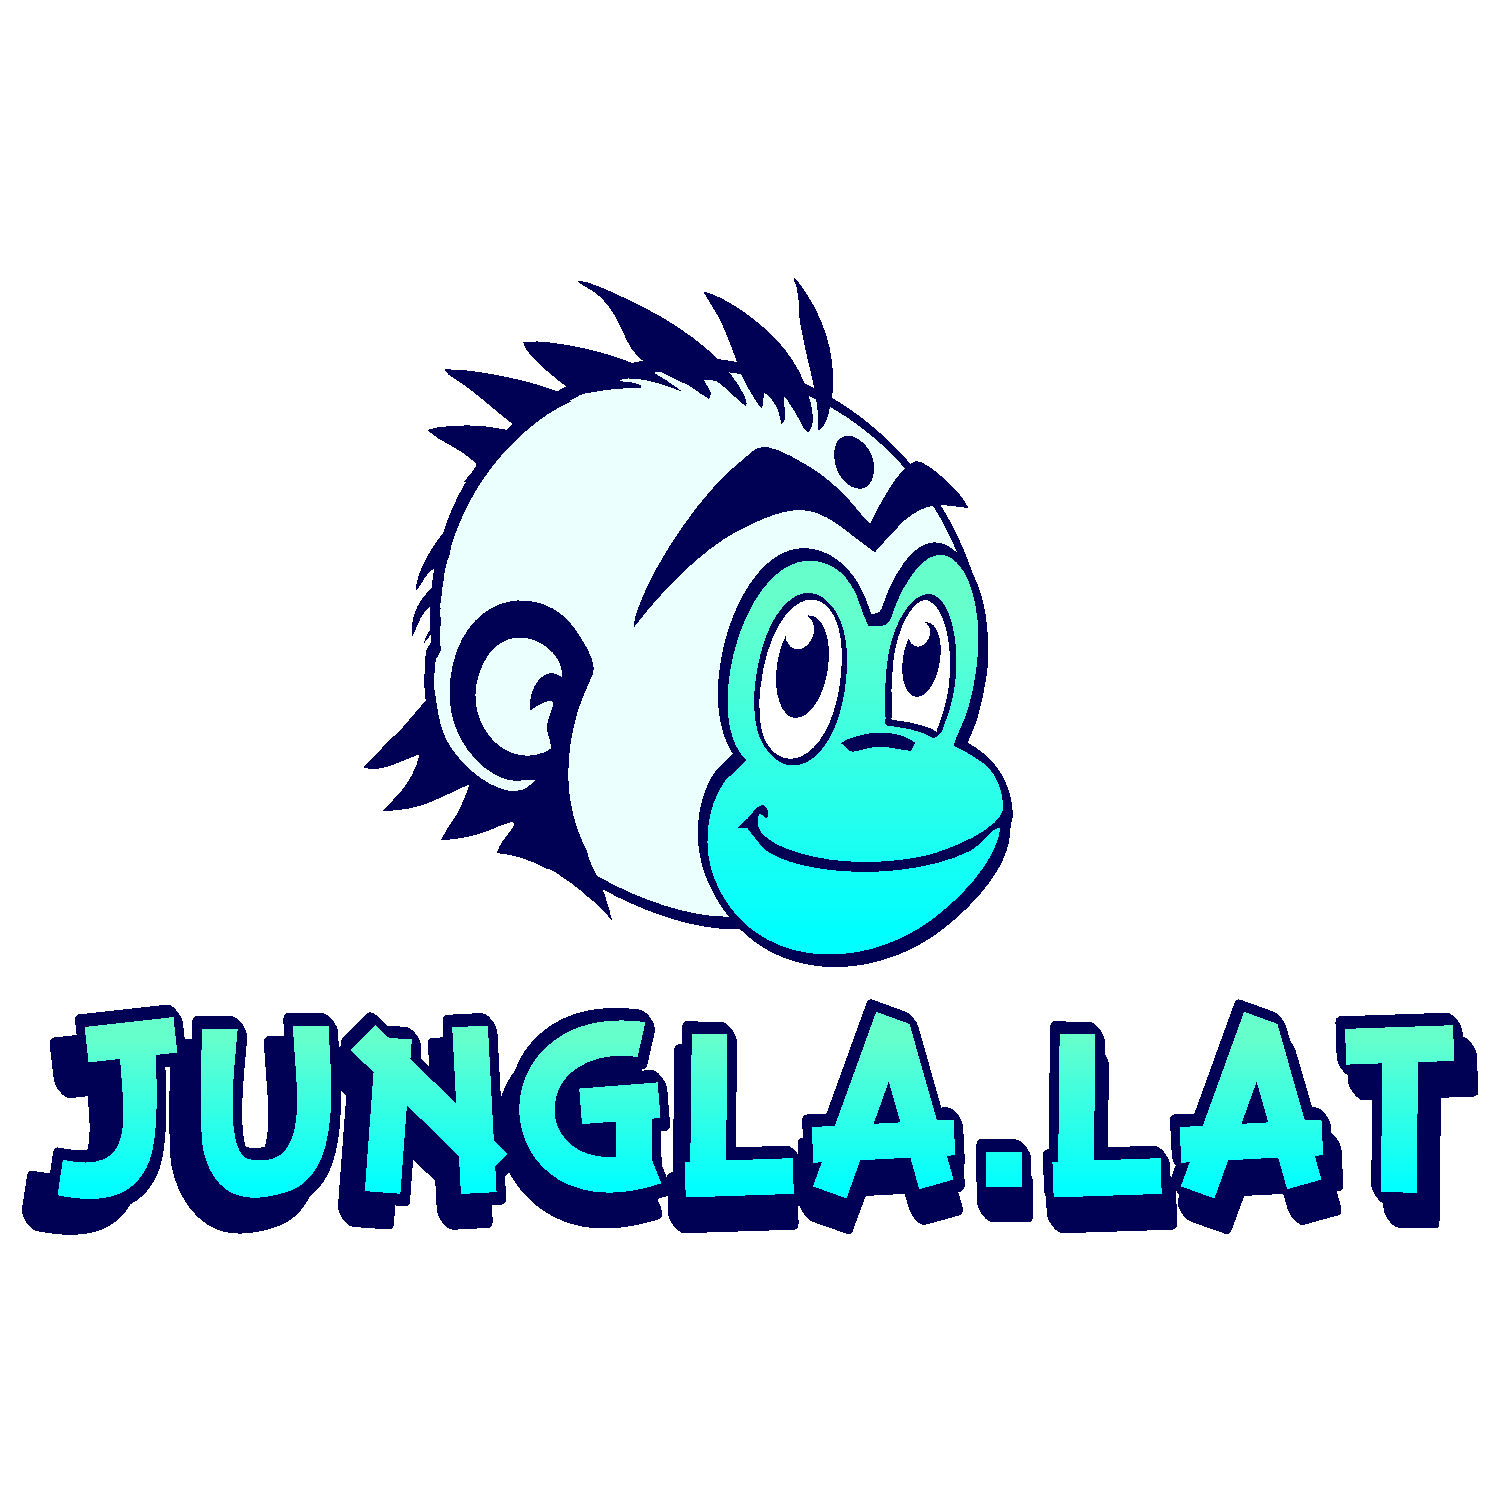 Logo for Jungla.lat